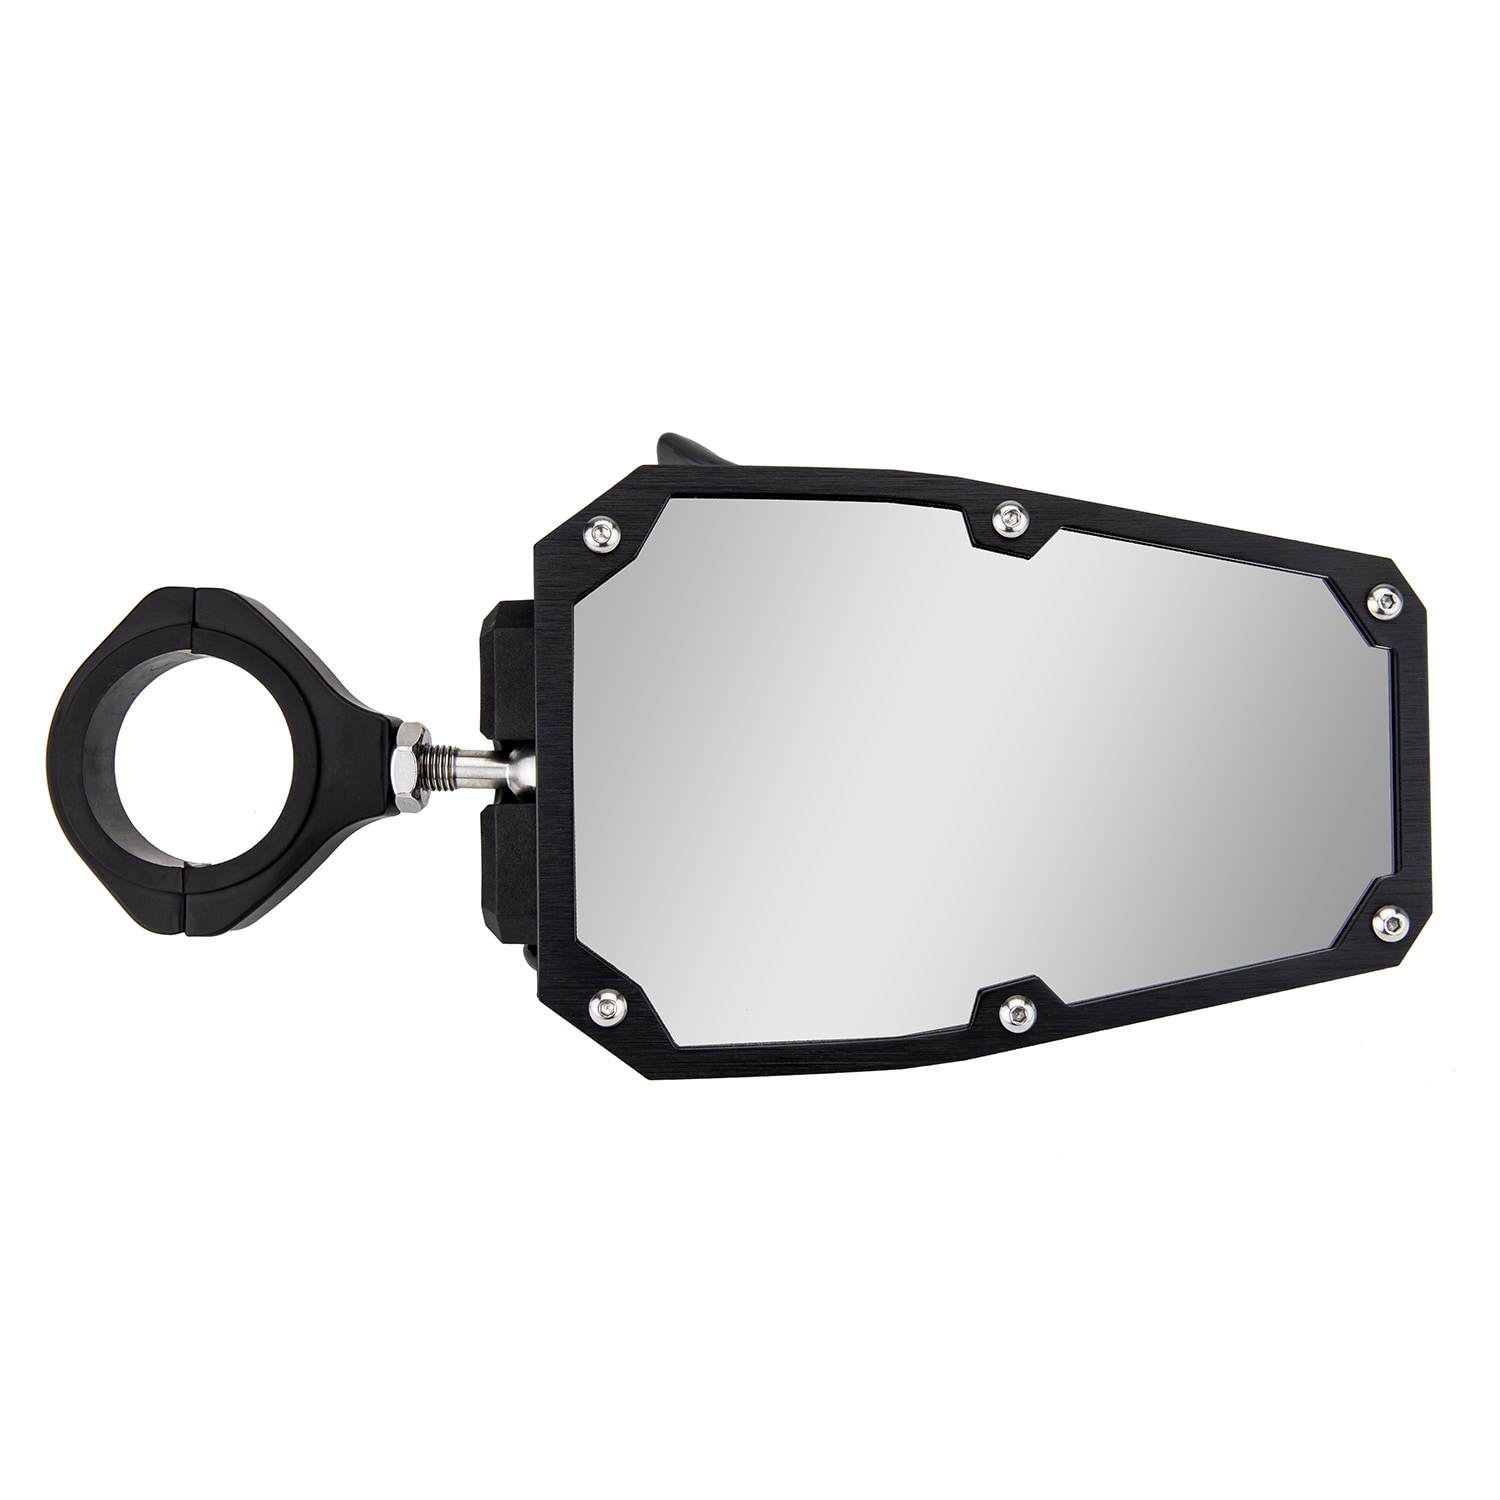 Bully ATV/UTV Side Mirror with LED Light at